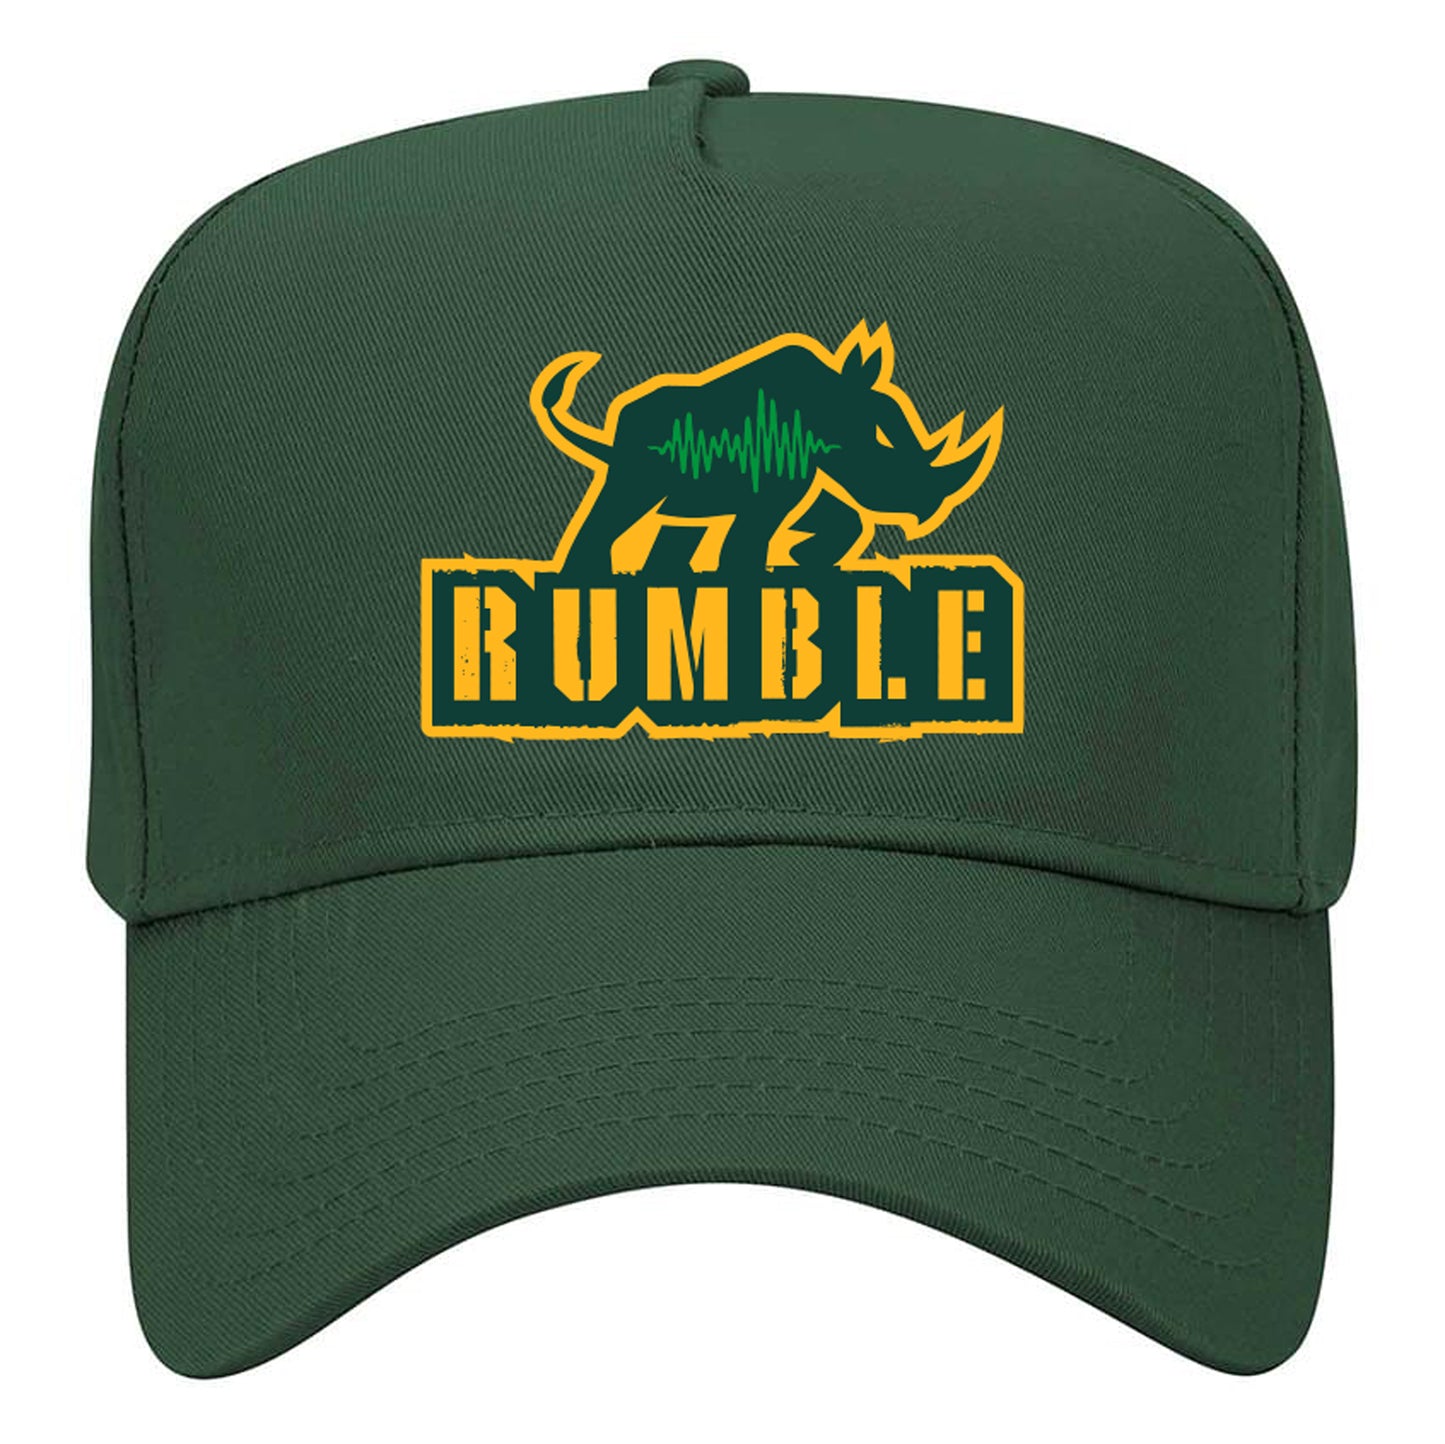 RUMBLE - Team Hat - Dark Green